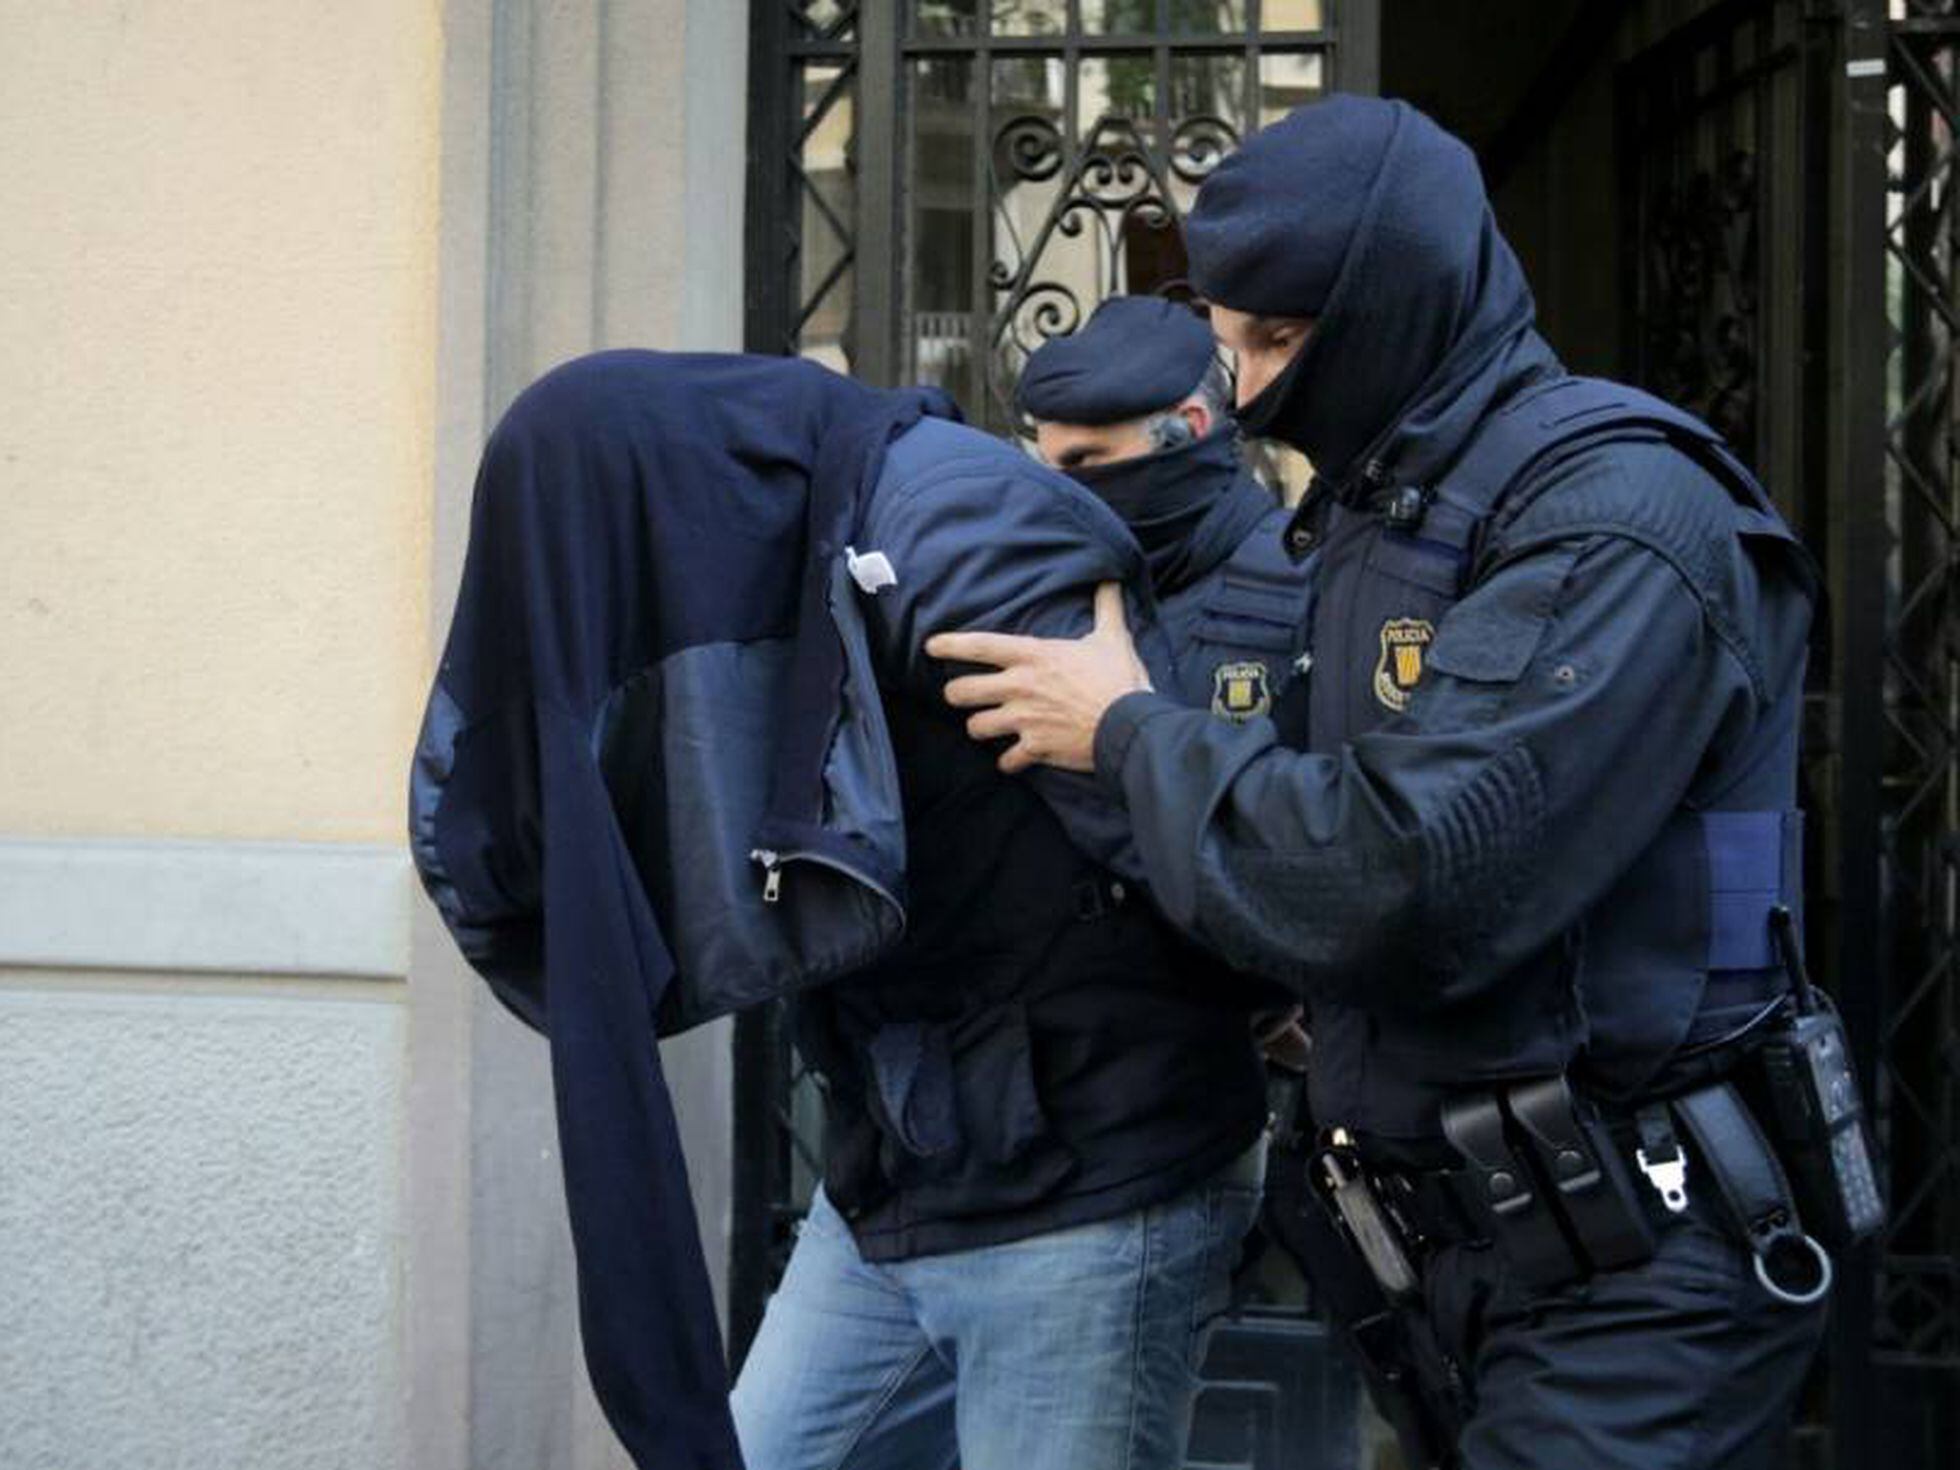 Top fugitive in Paris attacks arrested in Brussels raid